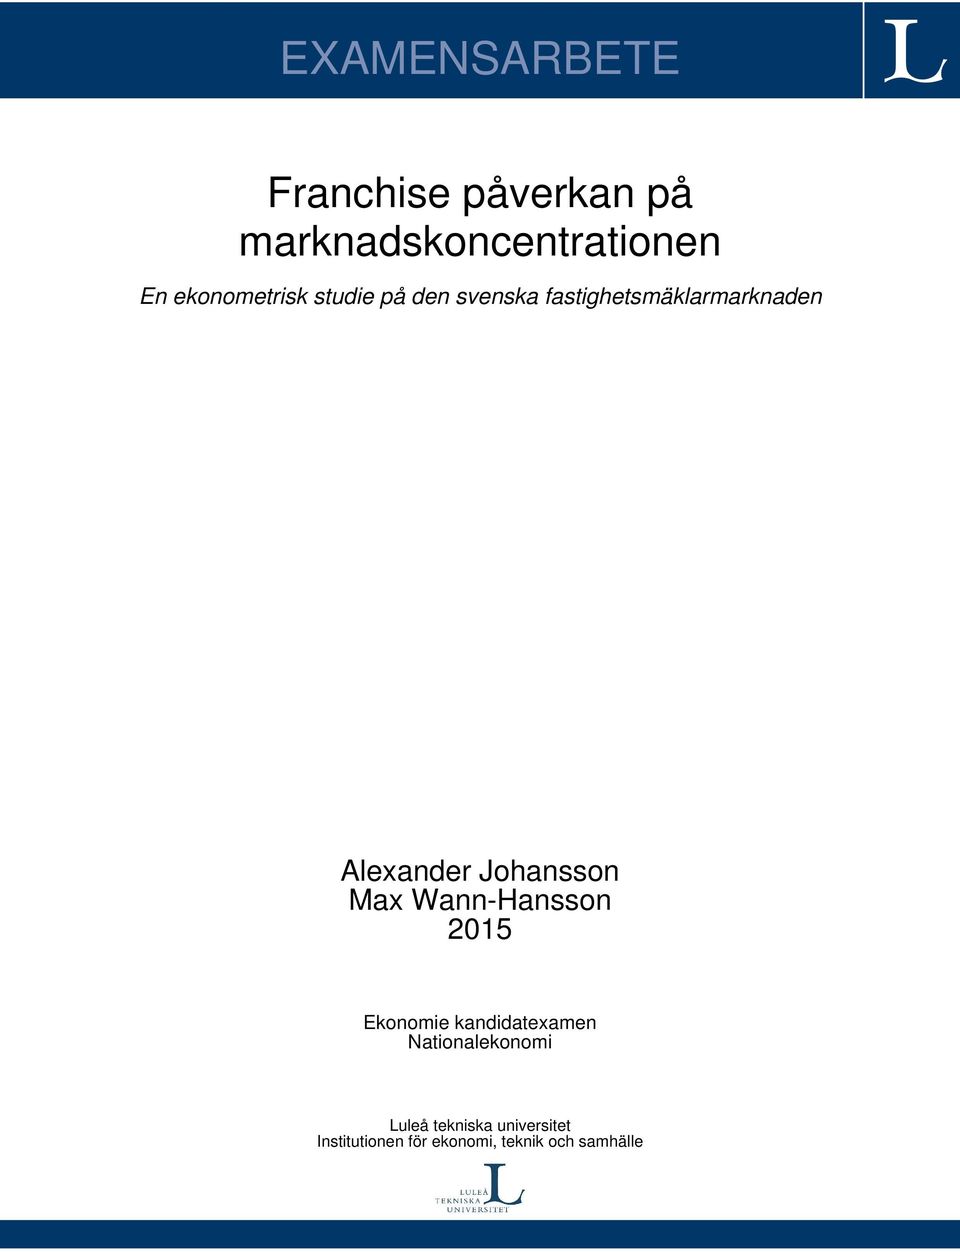 Alexander Johansson Max Wann-Hansson 2015 Ekonomie kandidatexamen